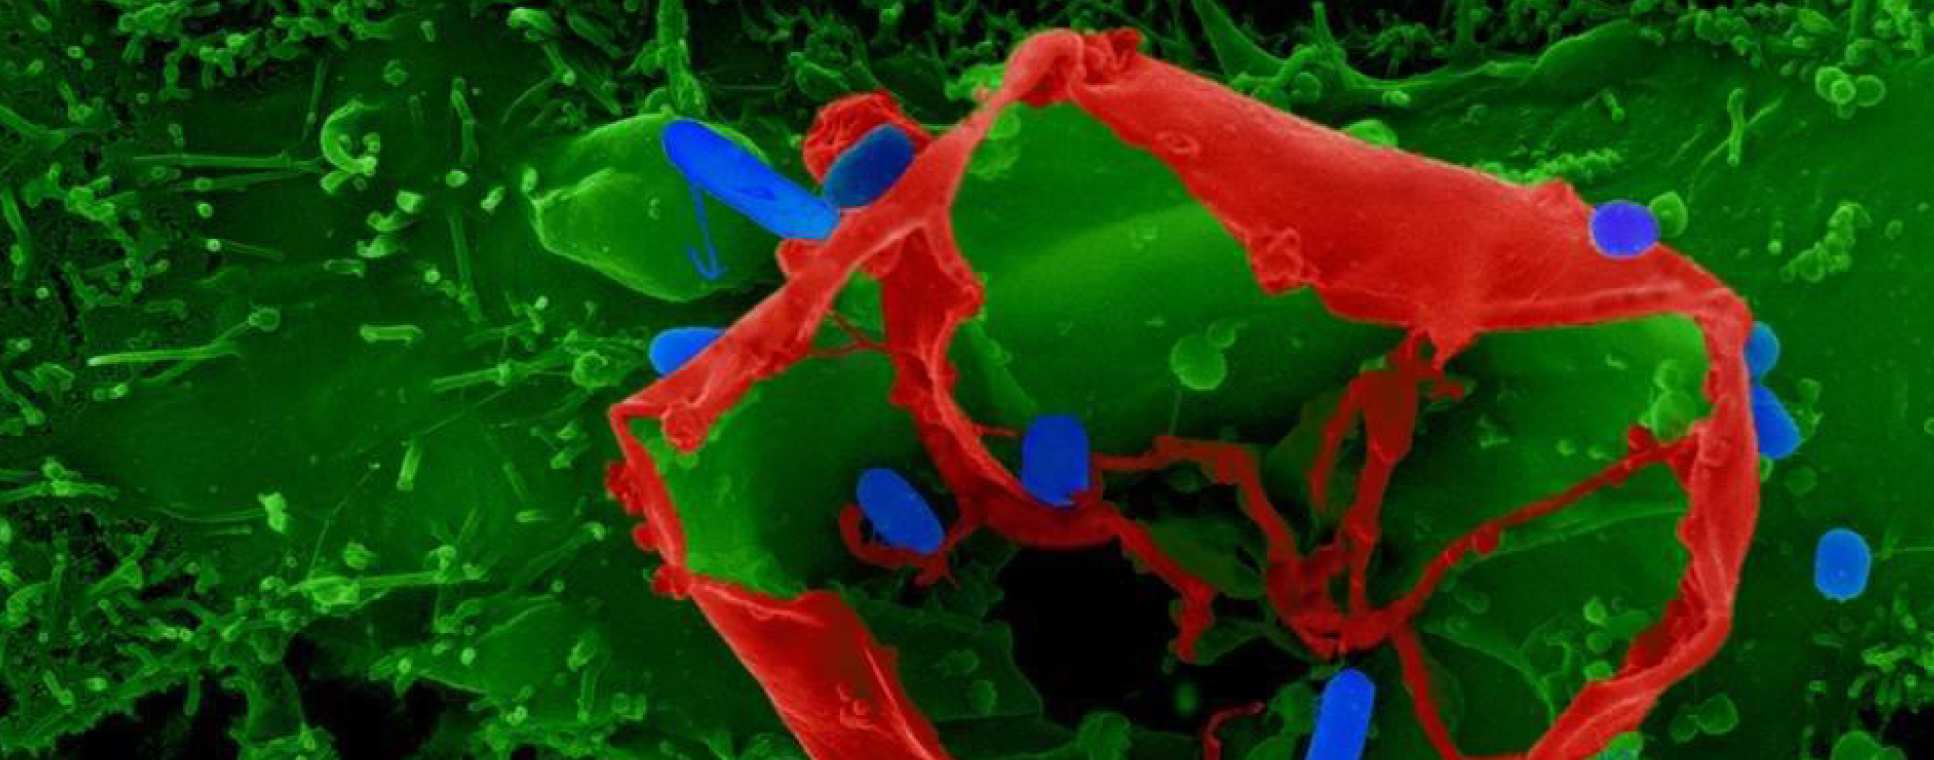 Cell enclosing bacteria